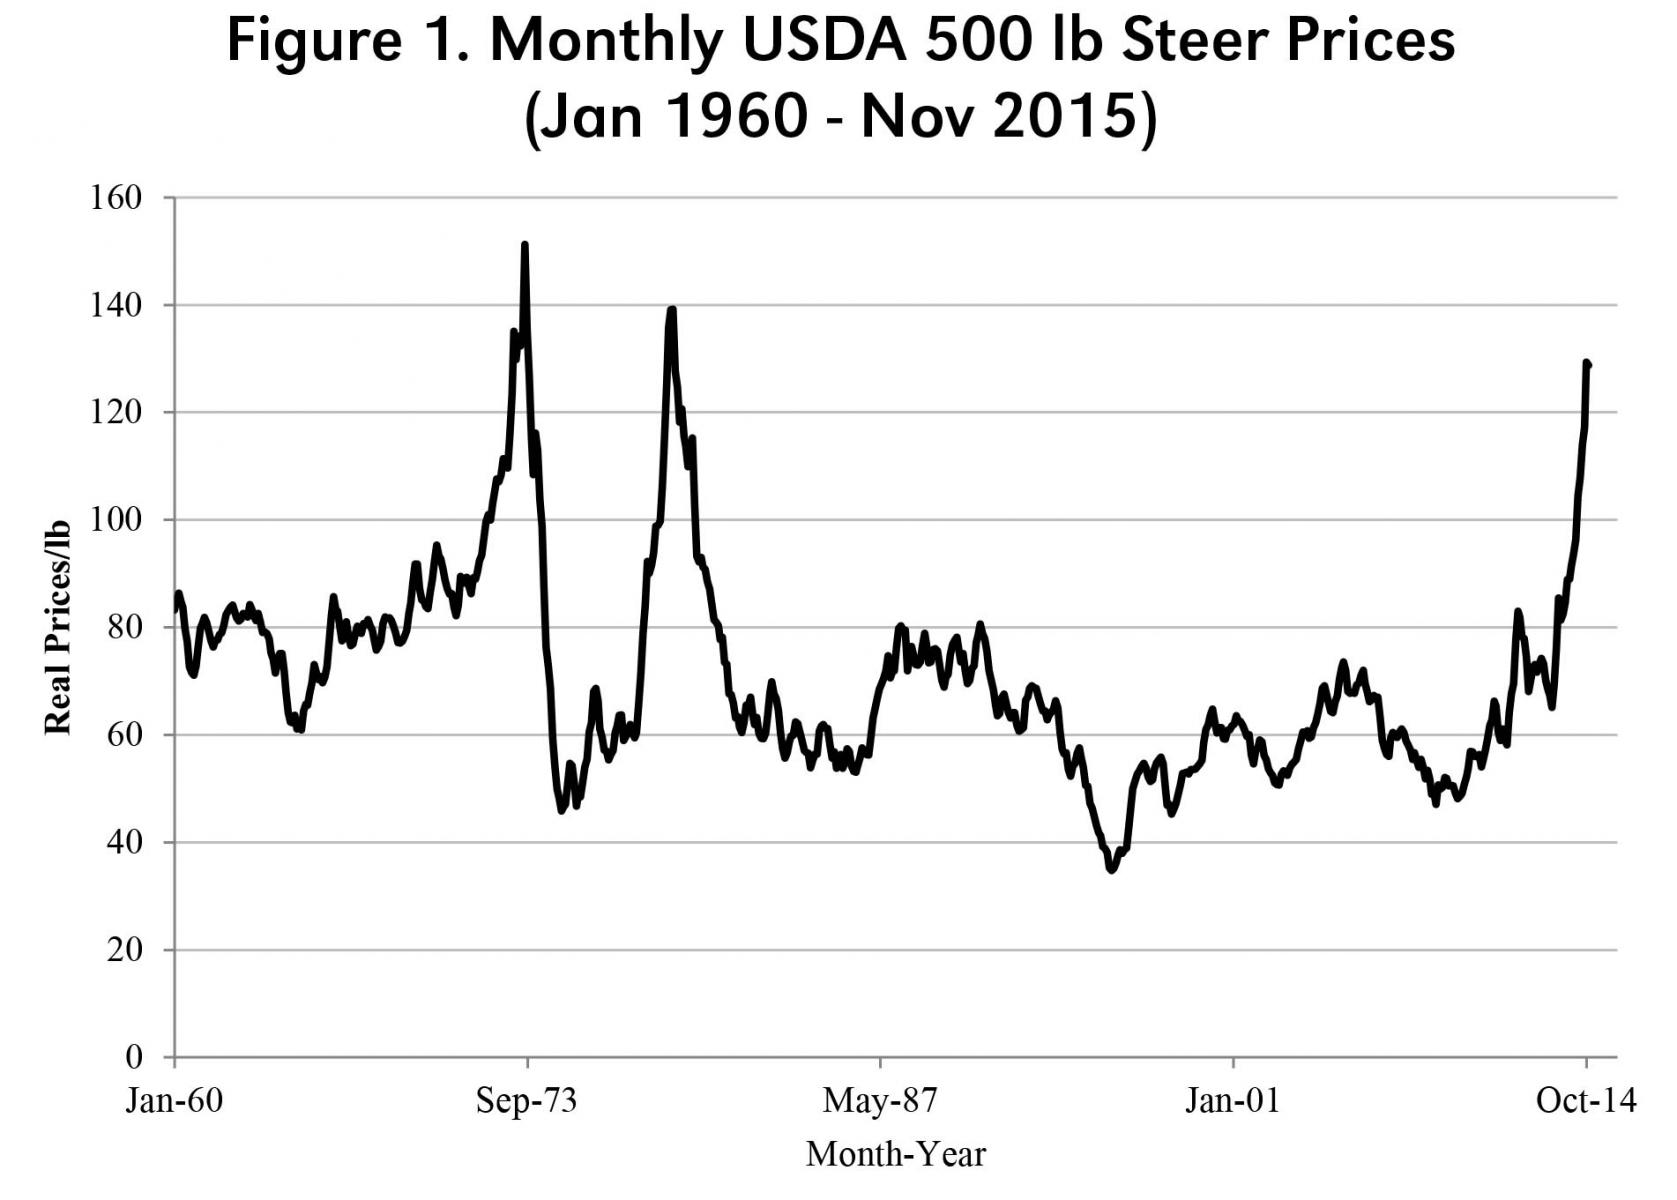 Figure 1. Monthly USDA 500 lb Steer Prices (Jan 1960 - Nov 2015)